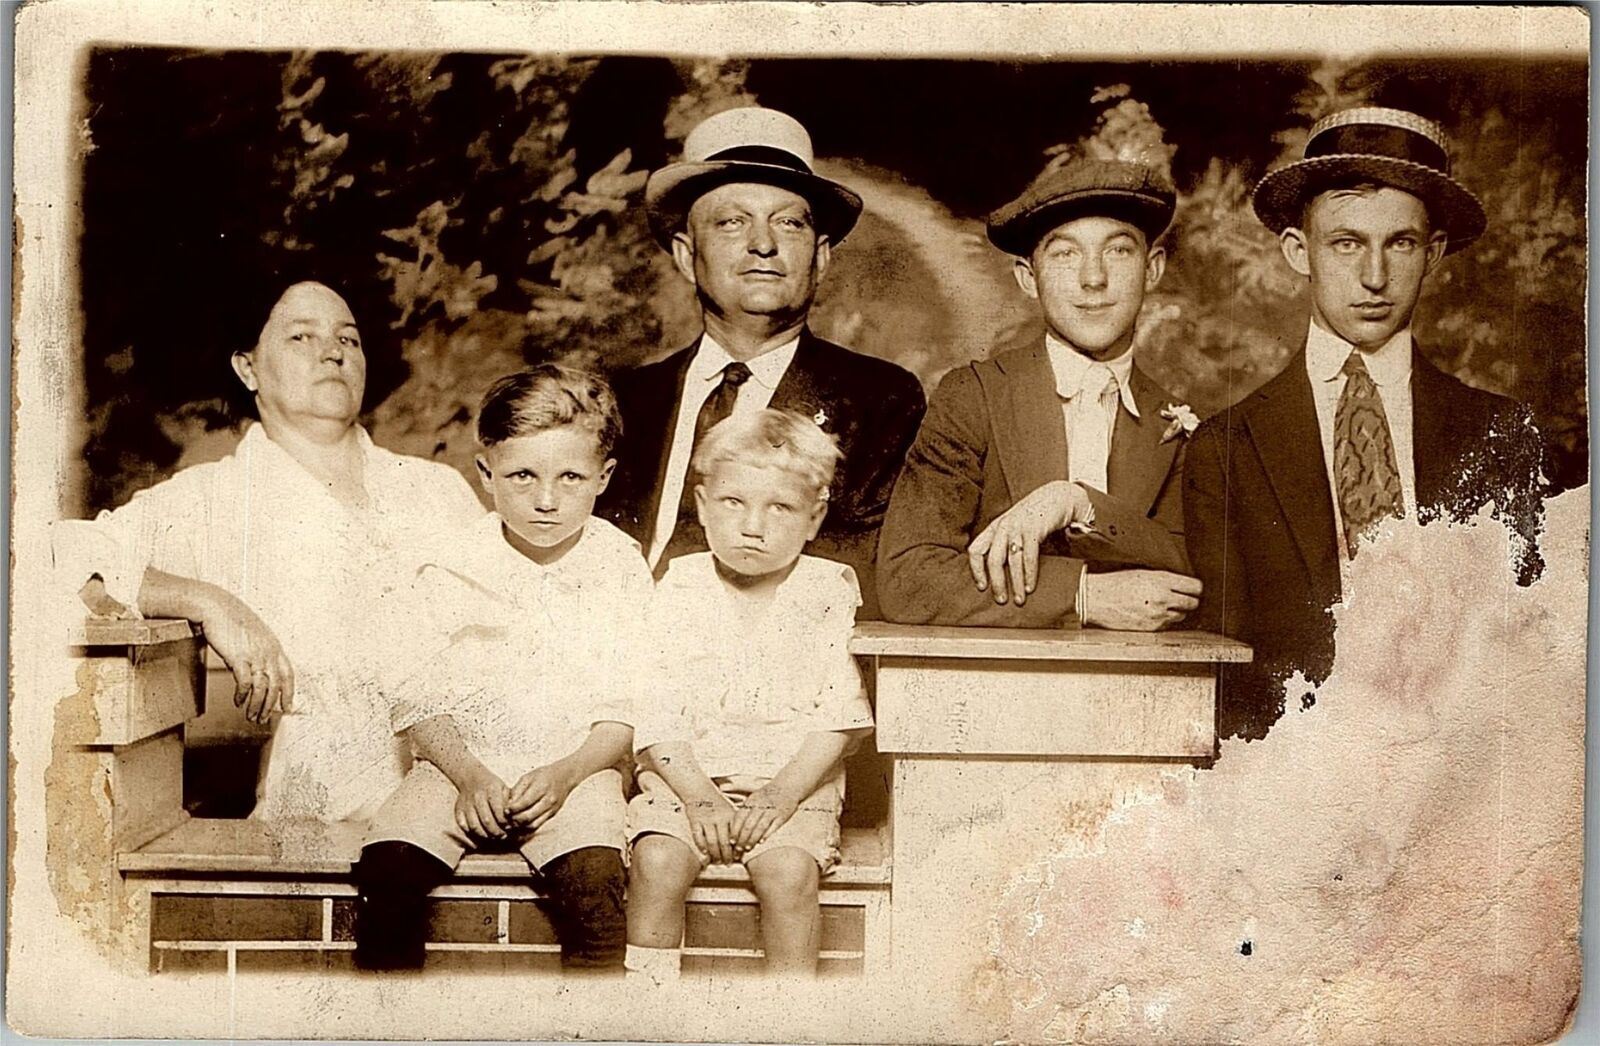 1921 LOUISVILLE KENTUCKY PROMINENT FAMILY POSES MEN HATS RPPC POSTCARD 38-70